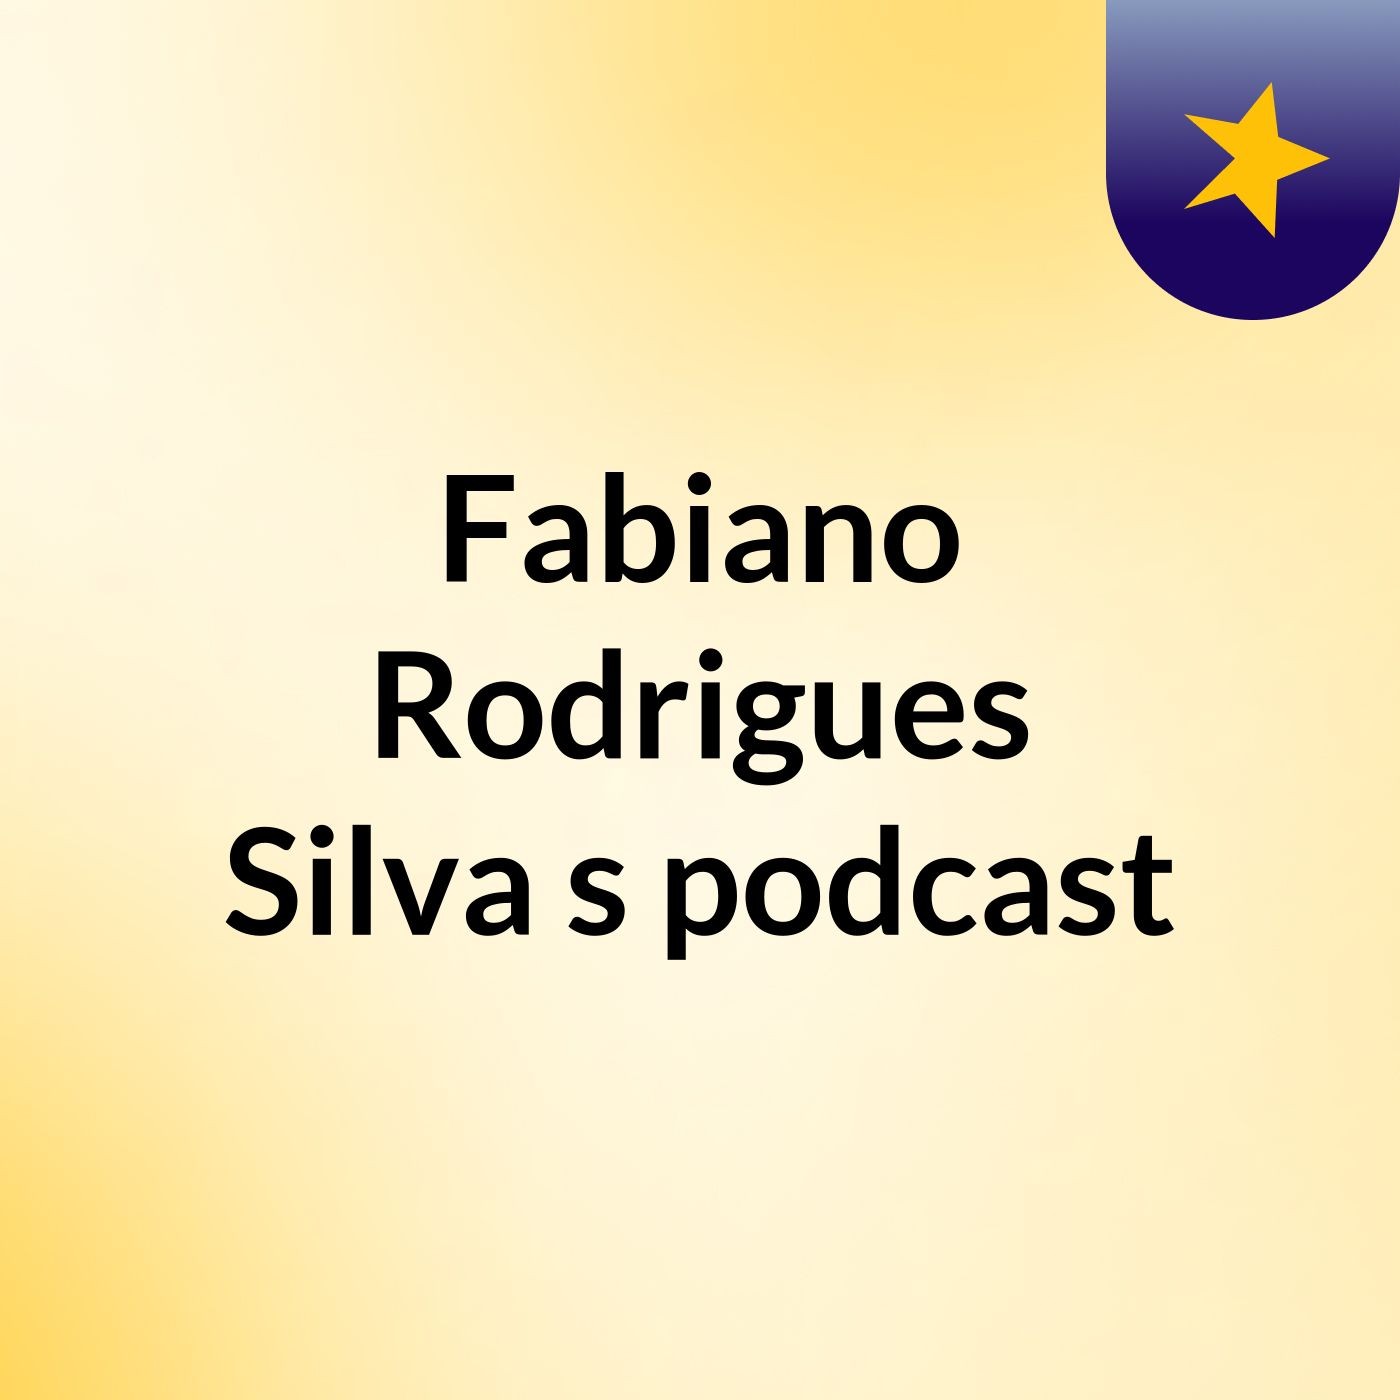 Fabiano Rodrigues Silva's podcast